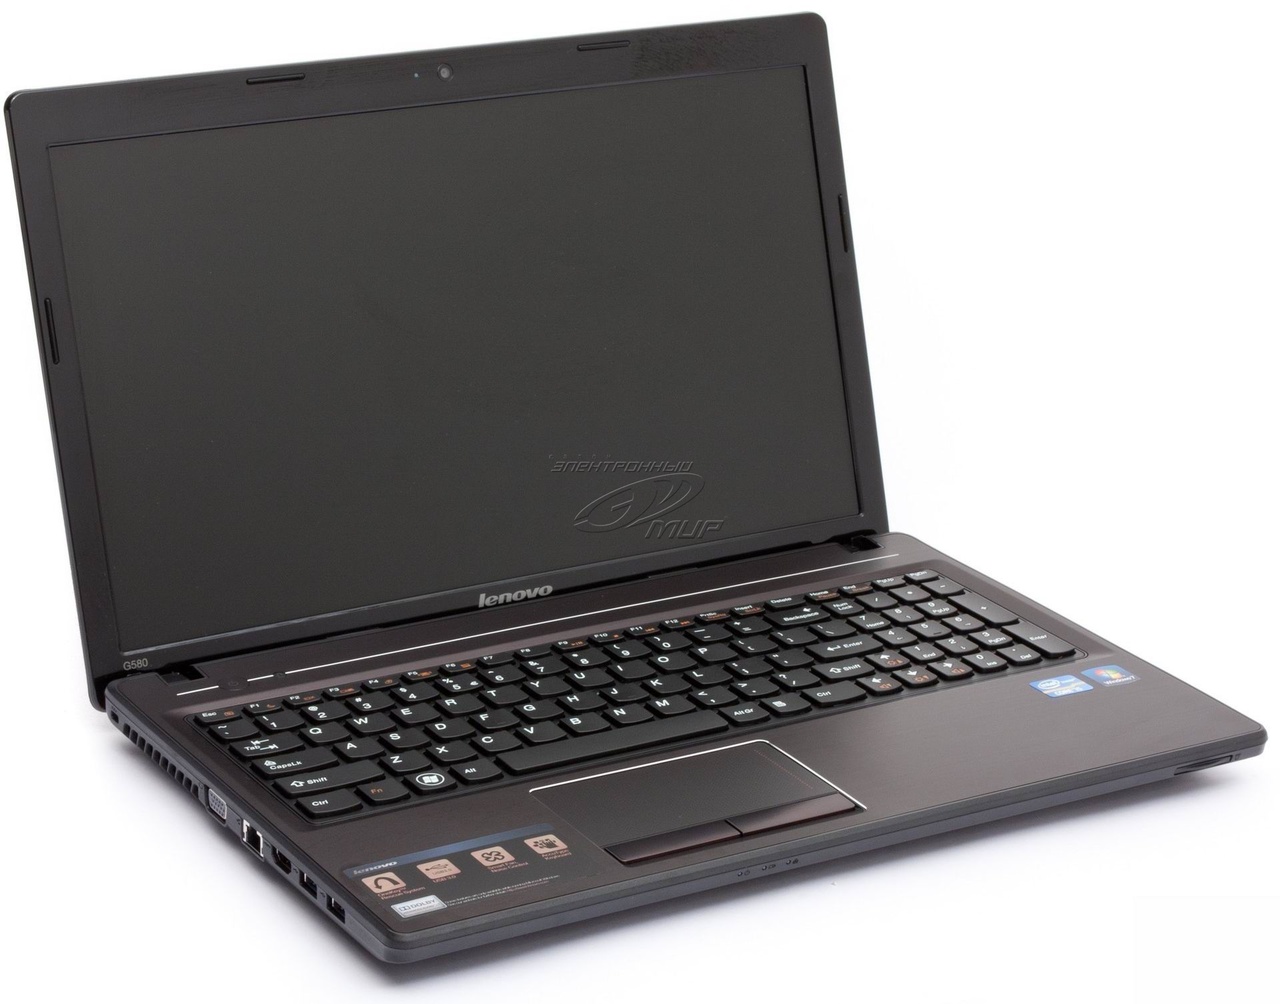 Ноутбук Lenovo Thinkpad Edge E531 (N4i3wrt)